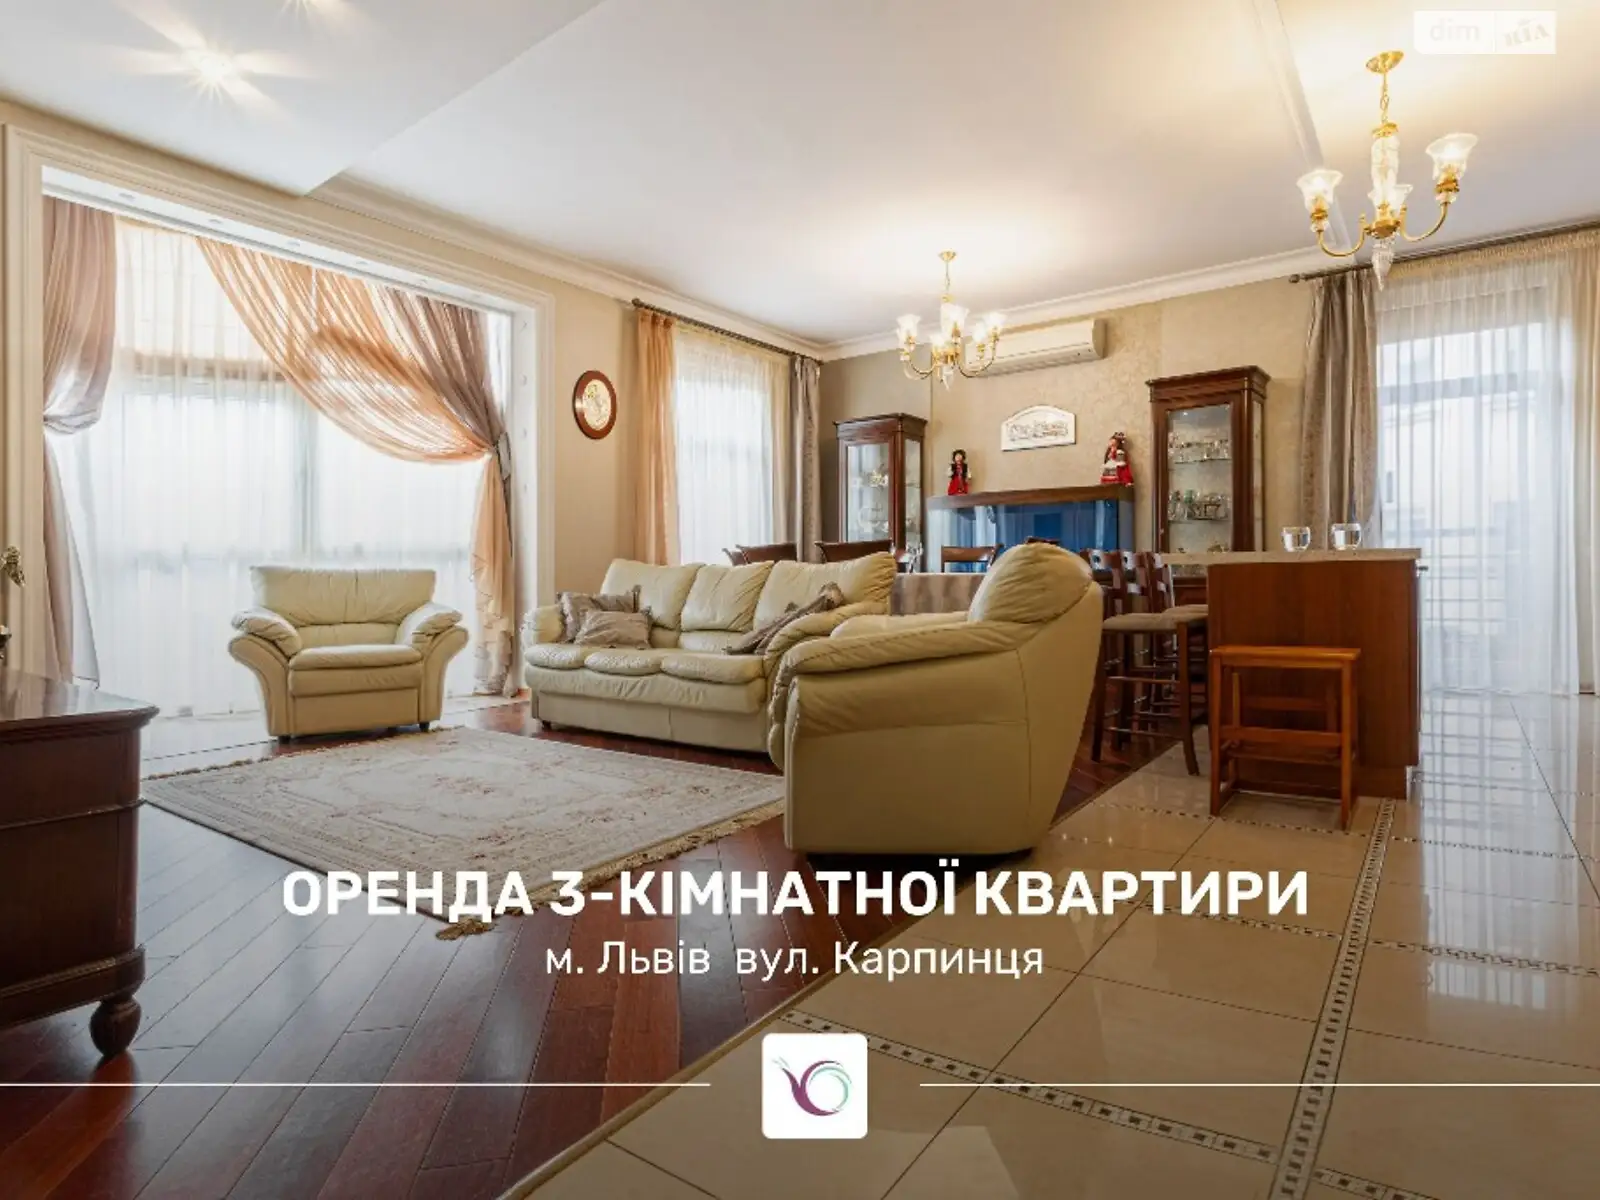 Сдается в аренду 3-комнатная квартира 145 кв. м в Львове, ул. Карпинца Ивана, 8 - фото 1